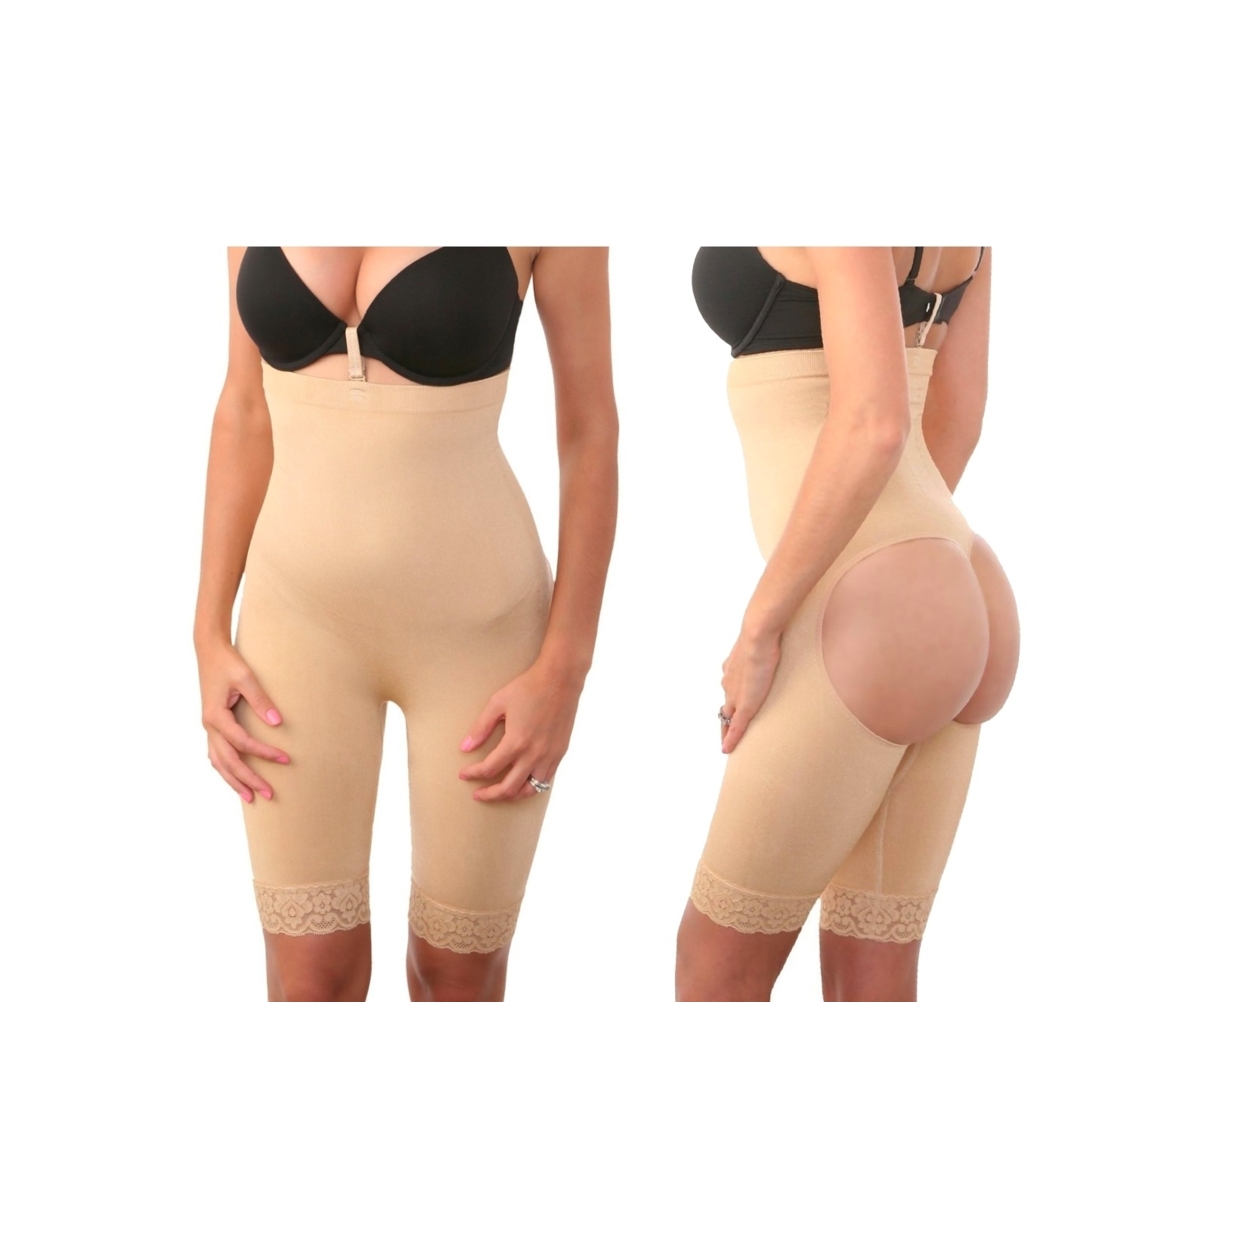 Women's Butt Uplifting Control Shaper - Black, 2X/3X